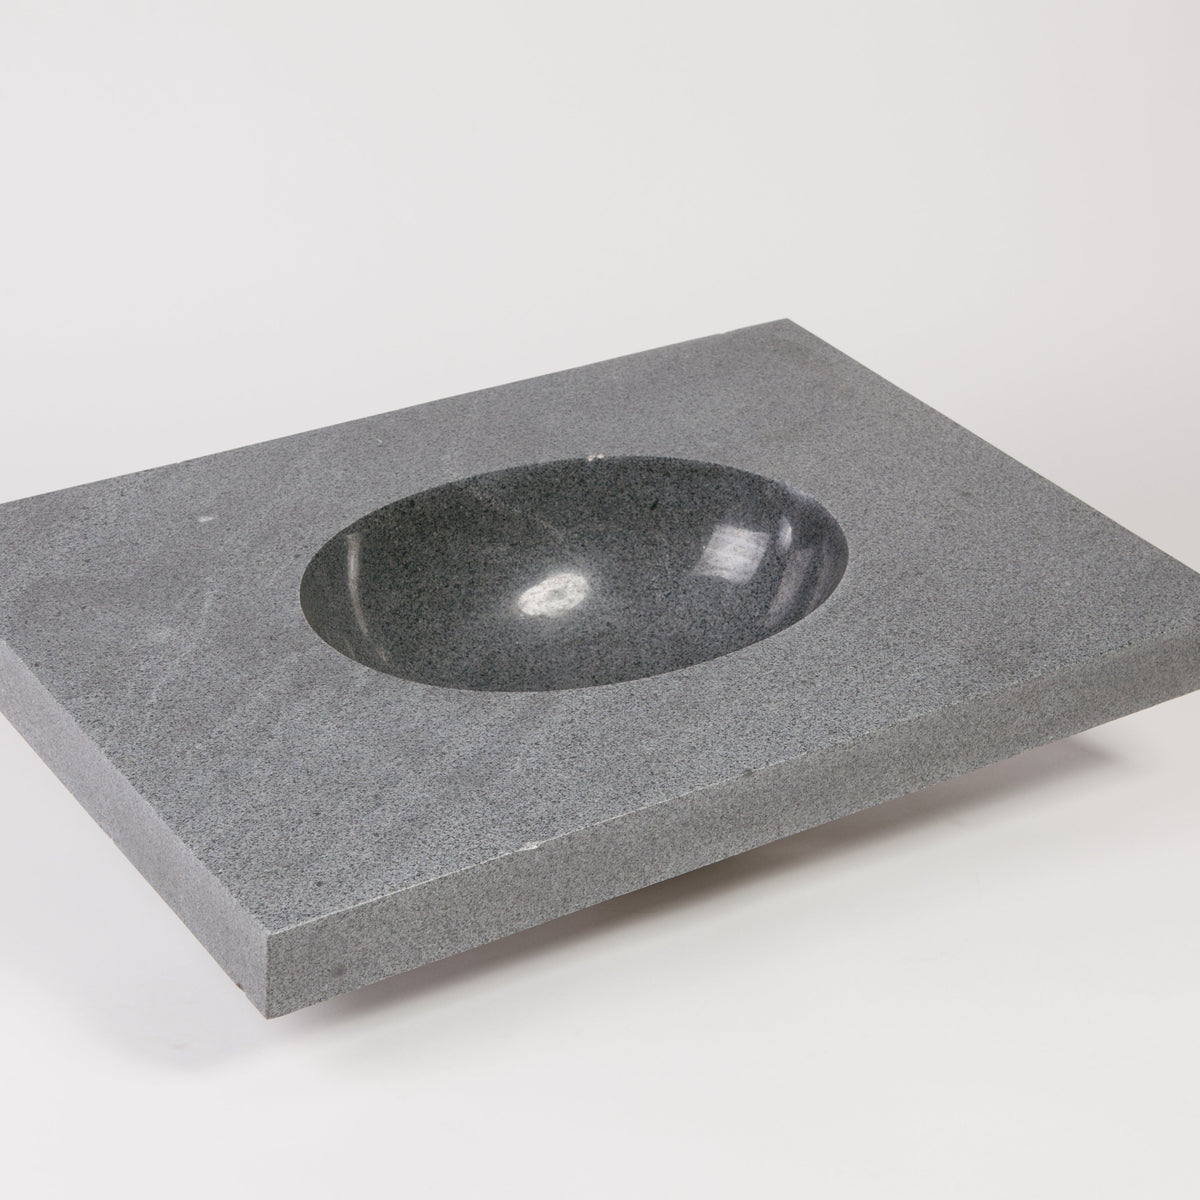 Integral Sink Prototype, Blue-Gray Granite image 1 of 4